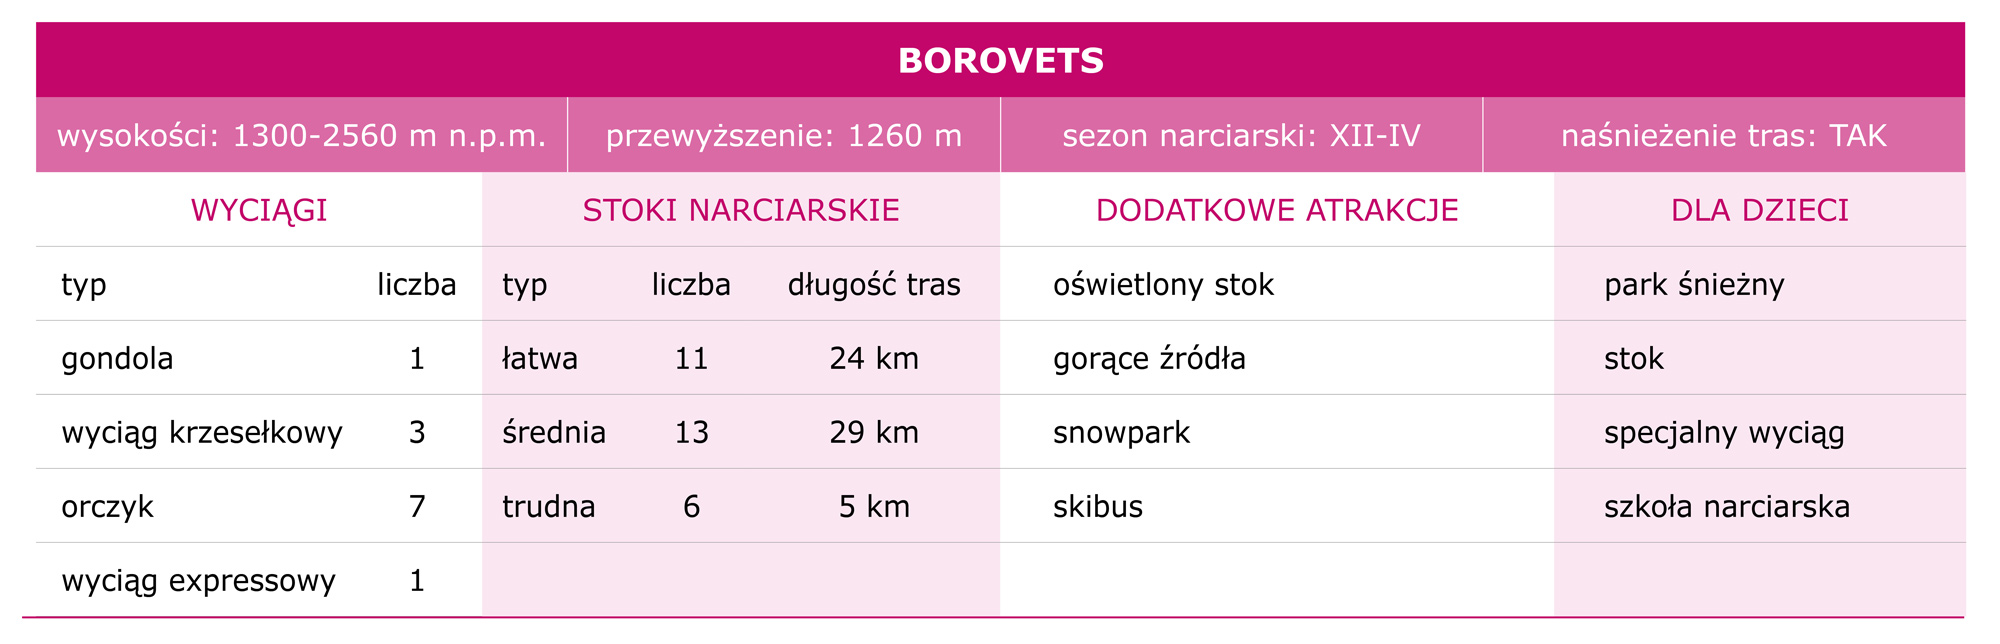 tabelka-Borovets.jpg